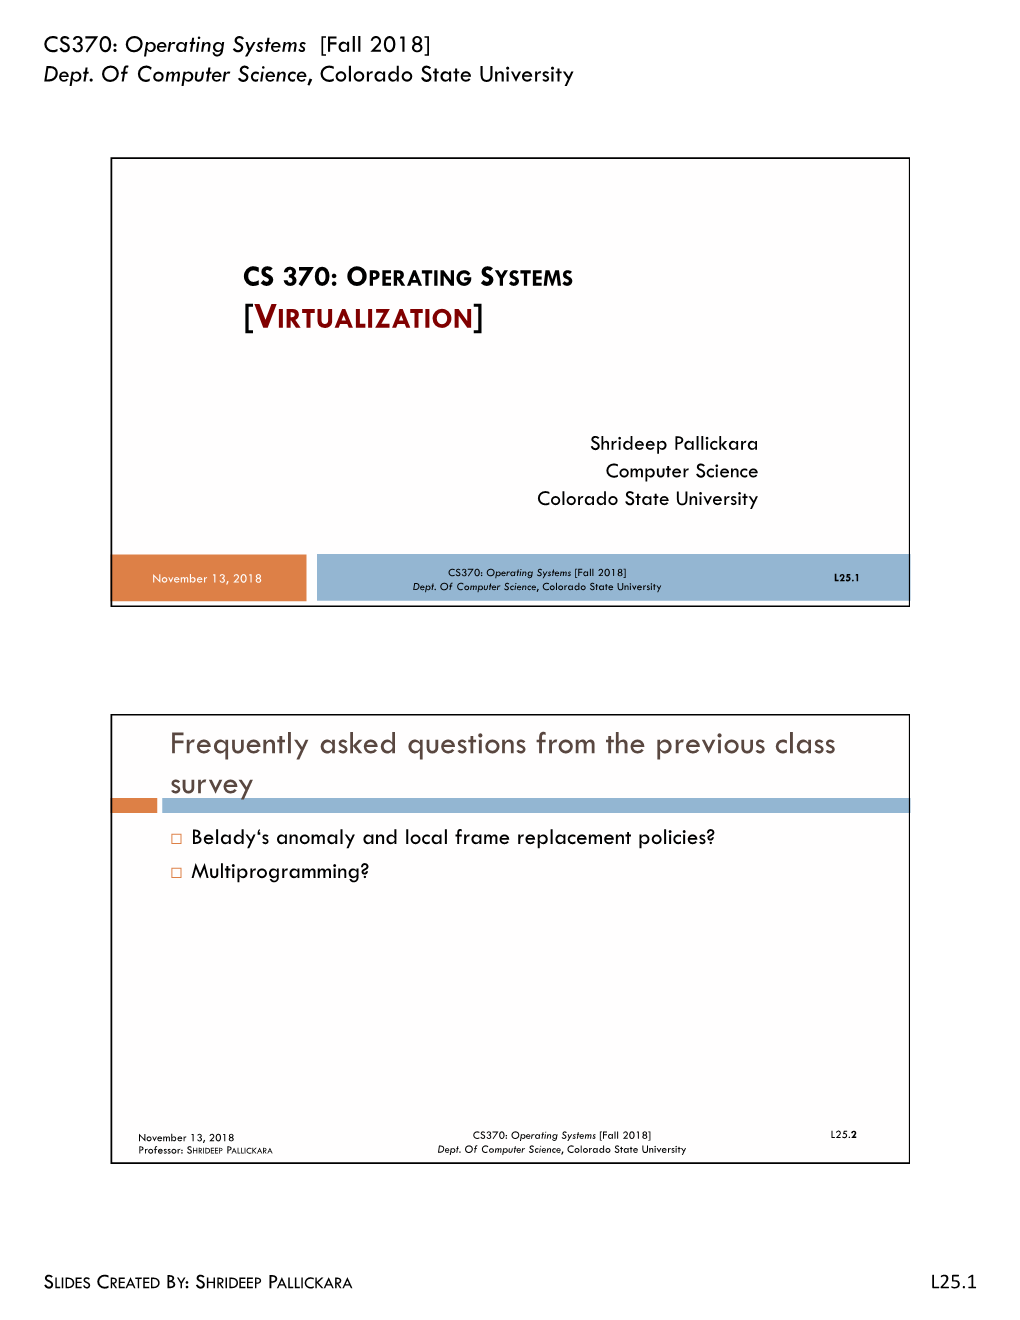 Cs 370: Operating Systems [Virtualization]